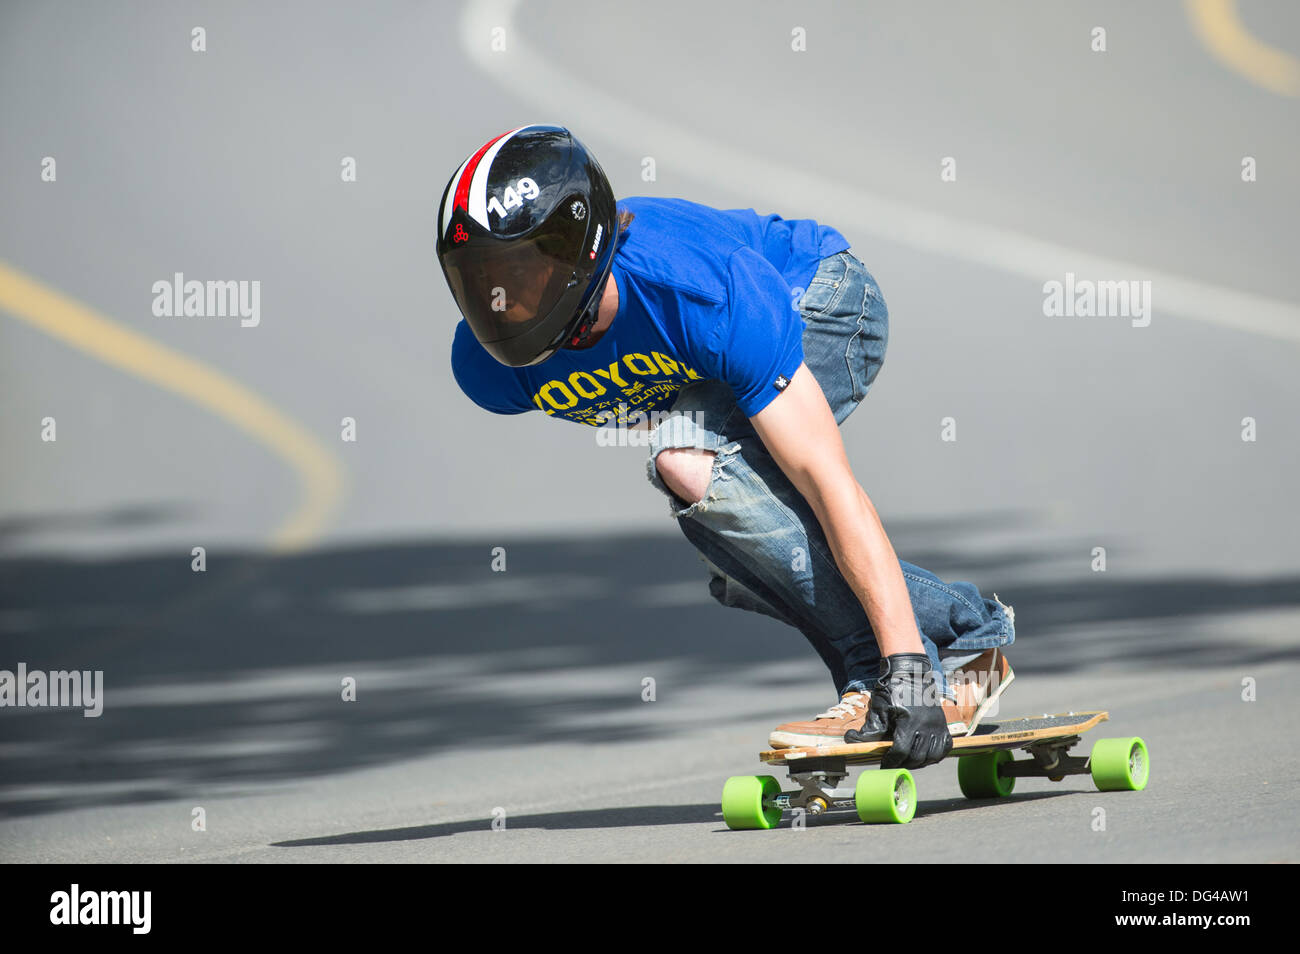 skateboard, longboard training cession on public road, downhill Stock Photo